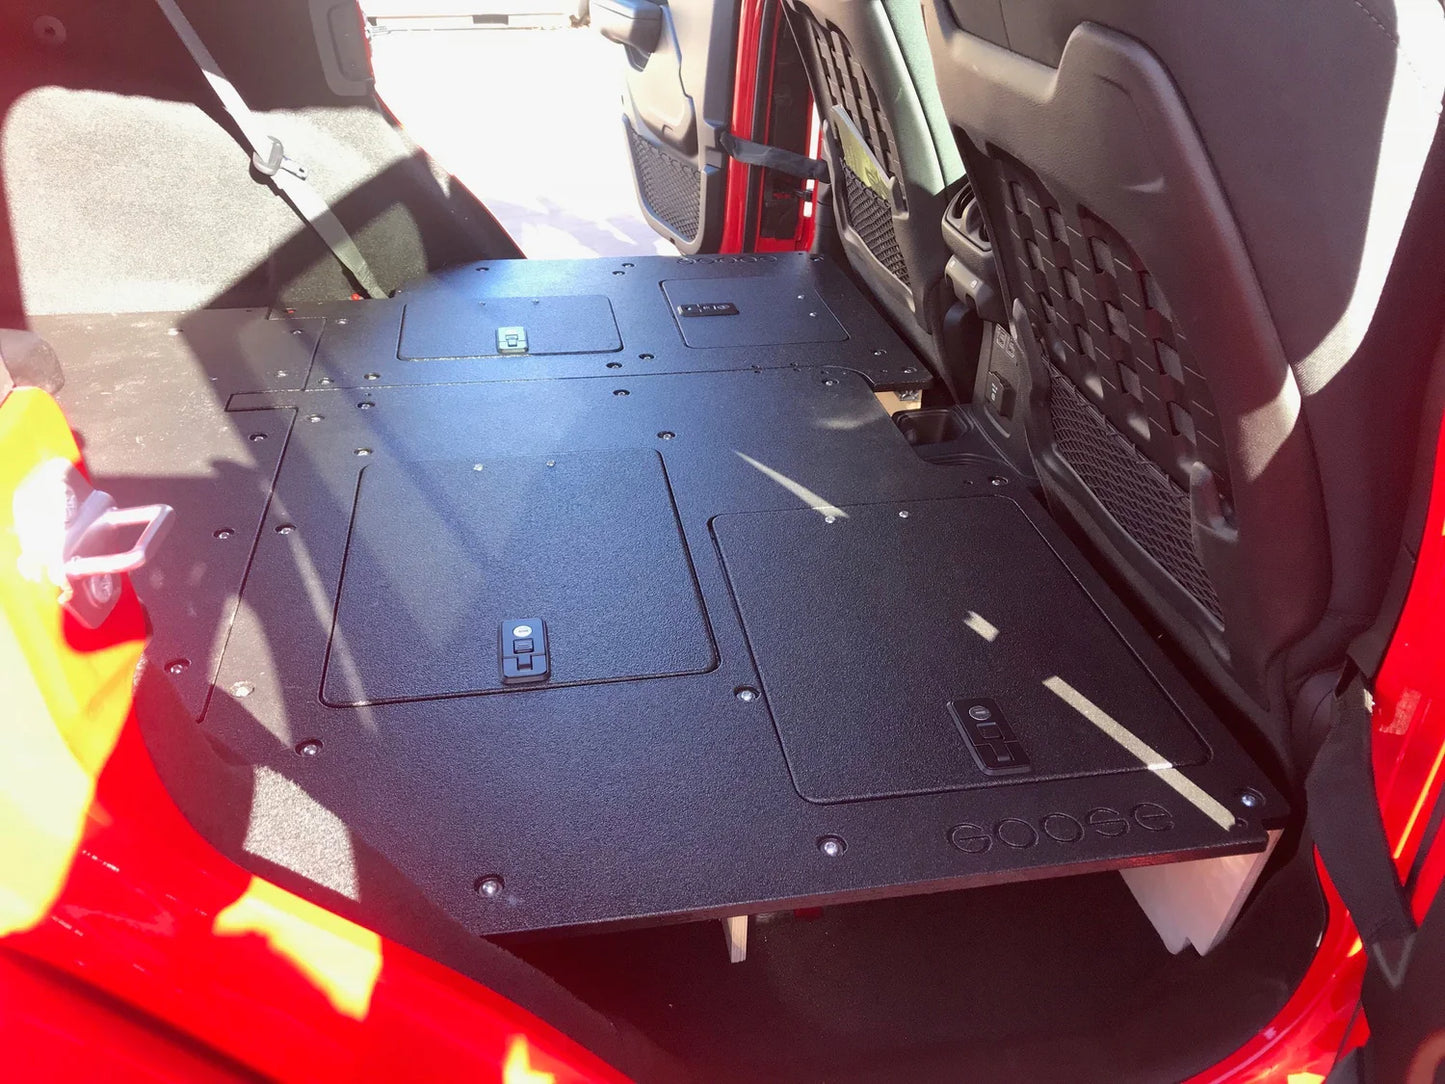 Jeep Wrangler 2018-Present JLU 4 Door - Second Row Seat Delete Plate System